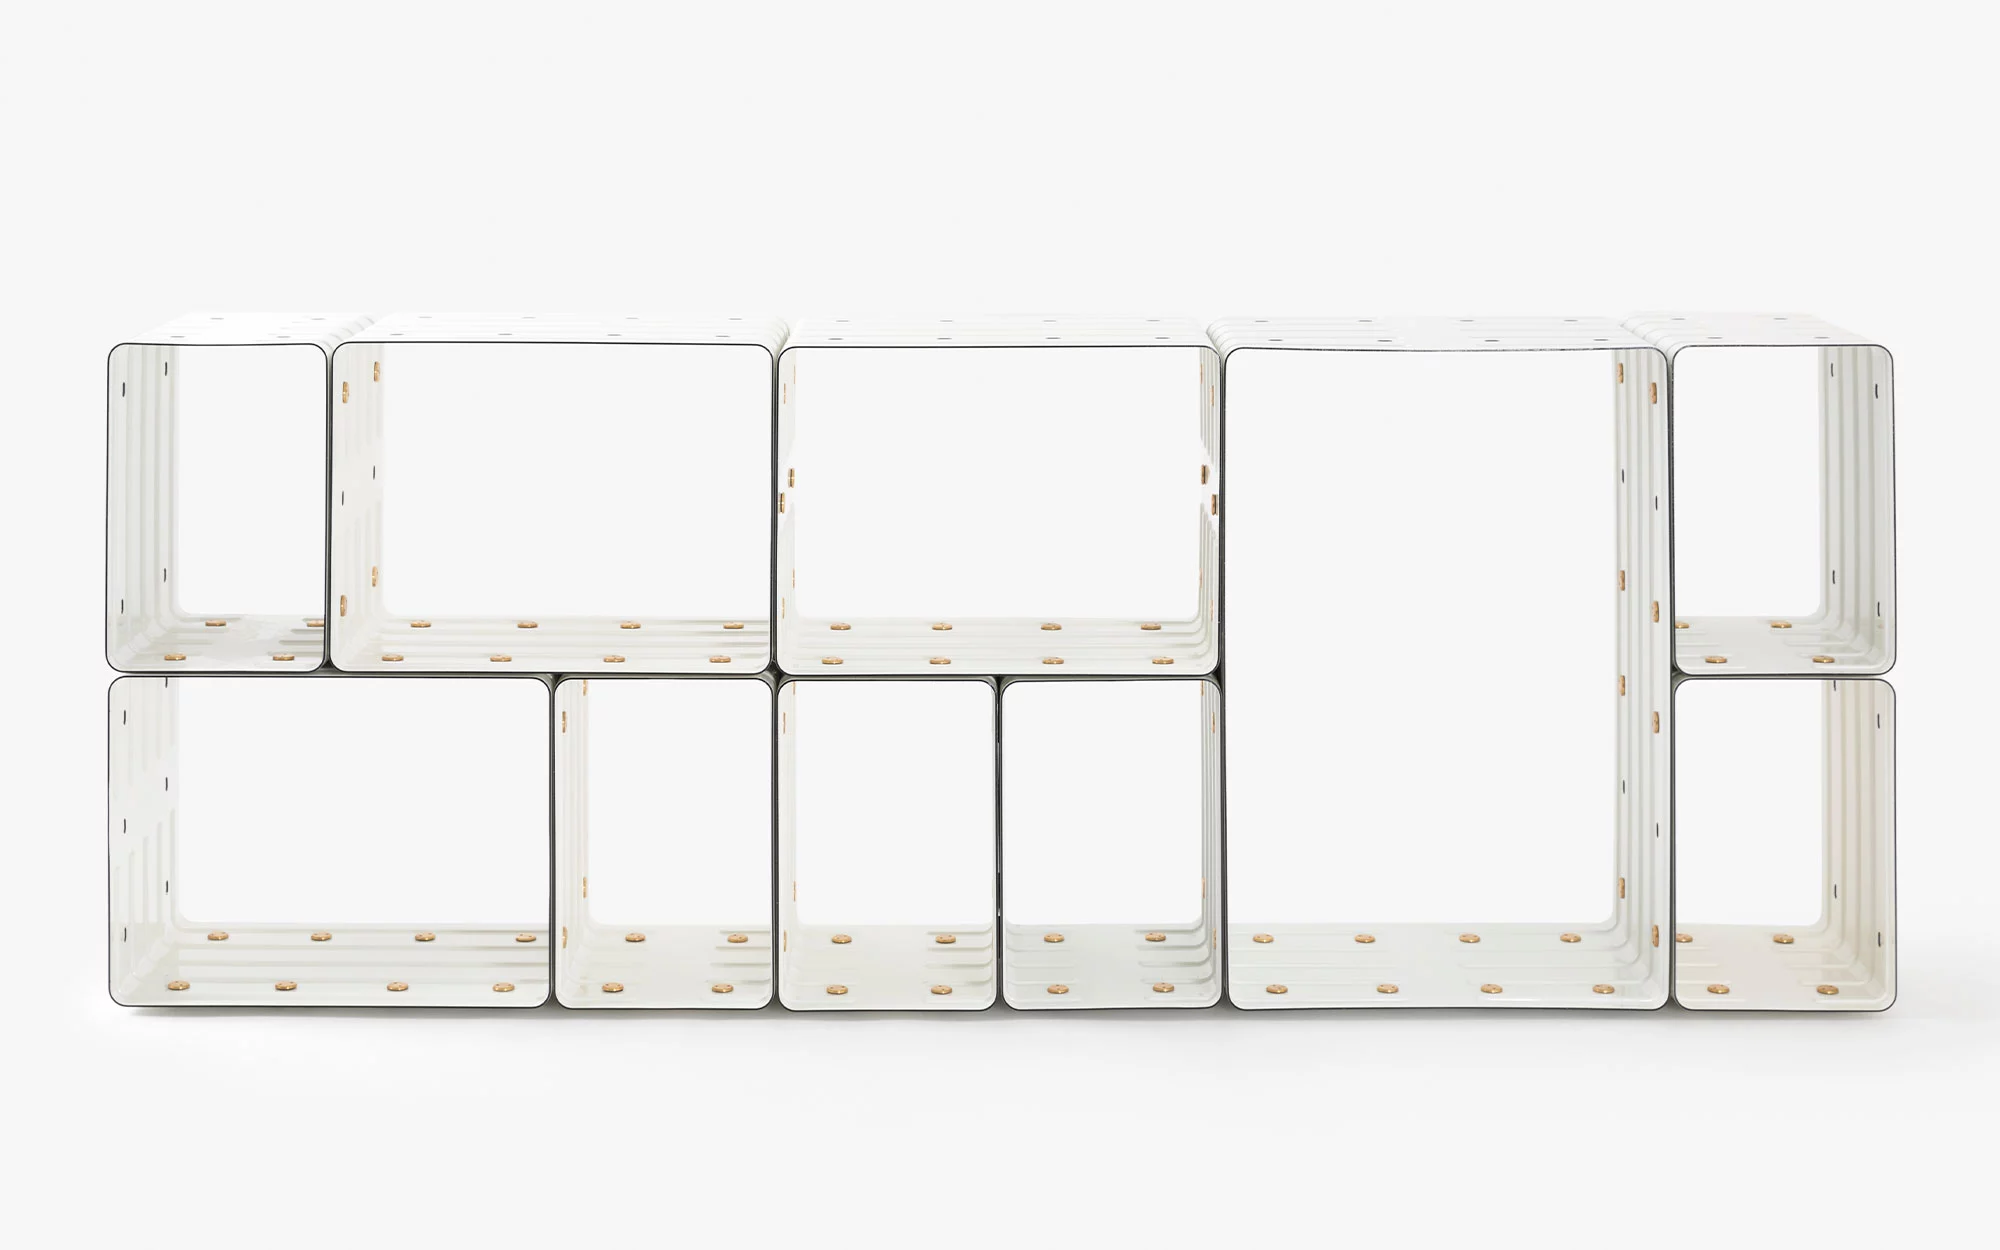 Quobus 1,3,6 monochromatic - Marc Newson - Table light - Galerie kreo